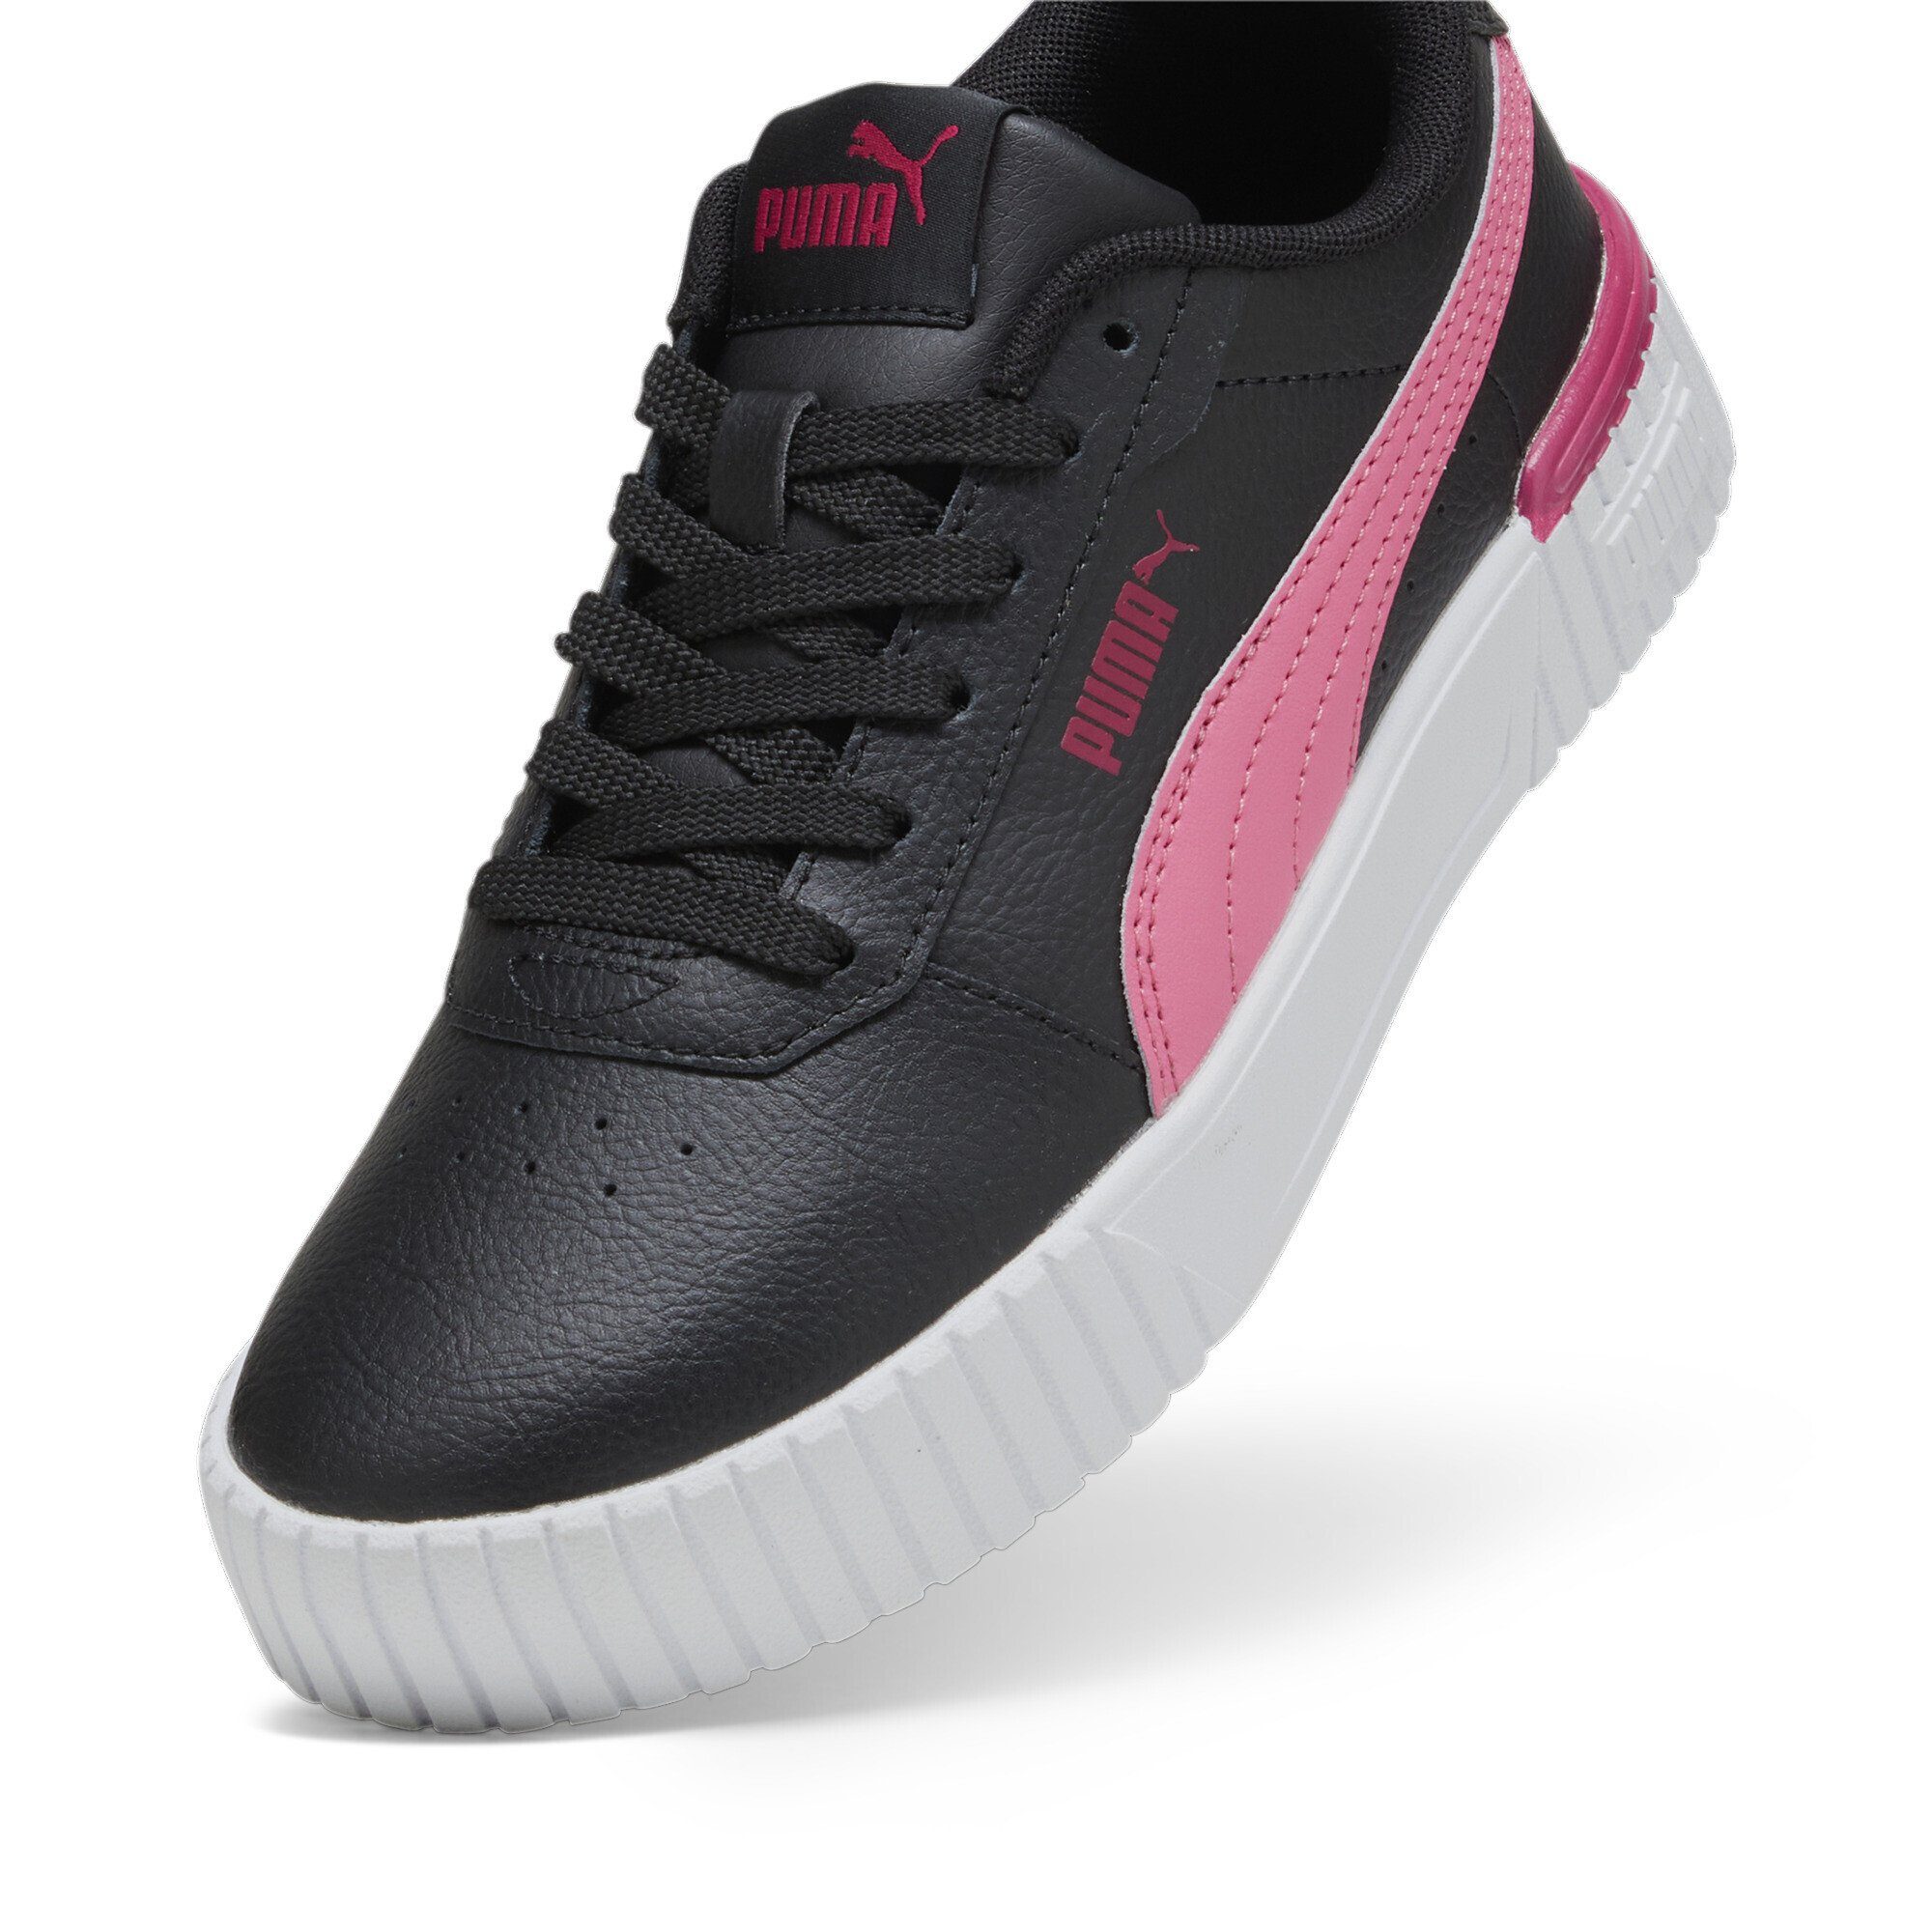 PUMA Carina 2.0 Sneakers Burst Pinktastic Pink Strawberry White Black Jugendliche Sneaker